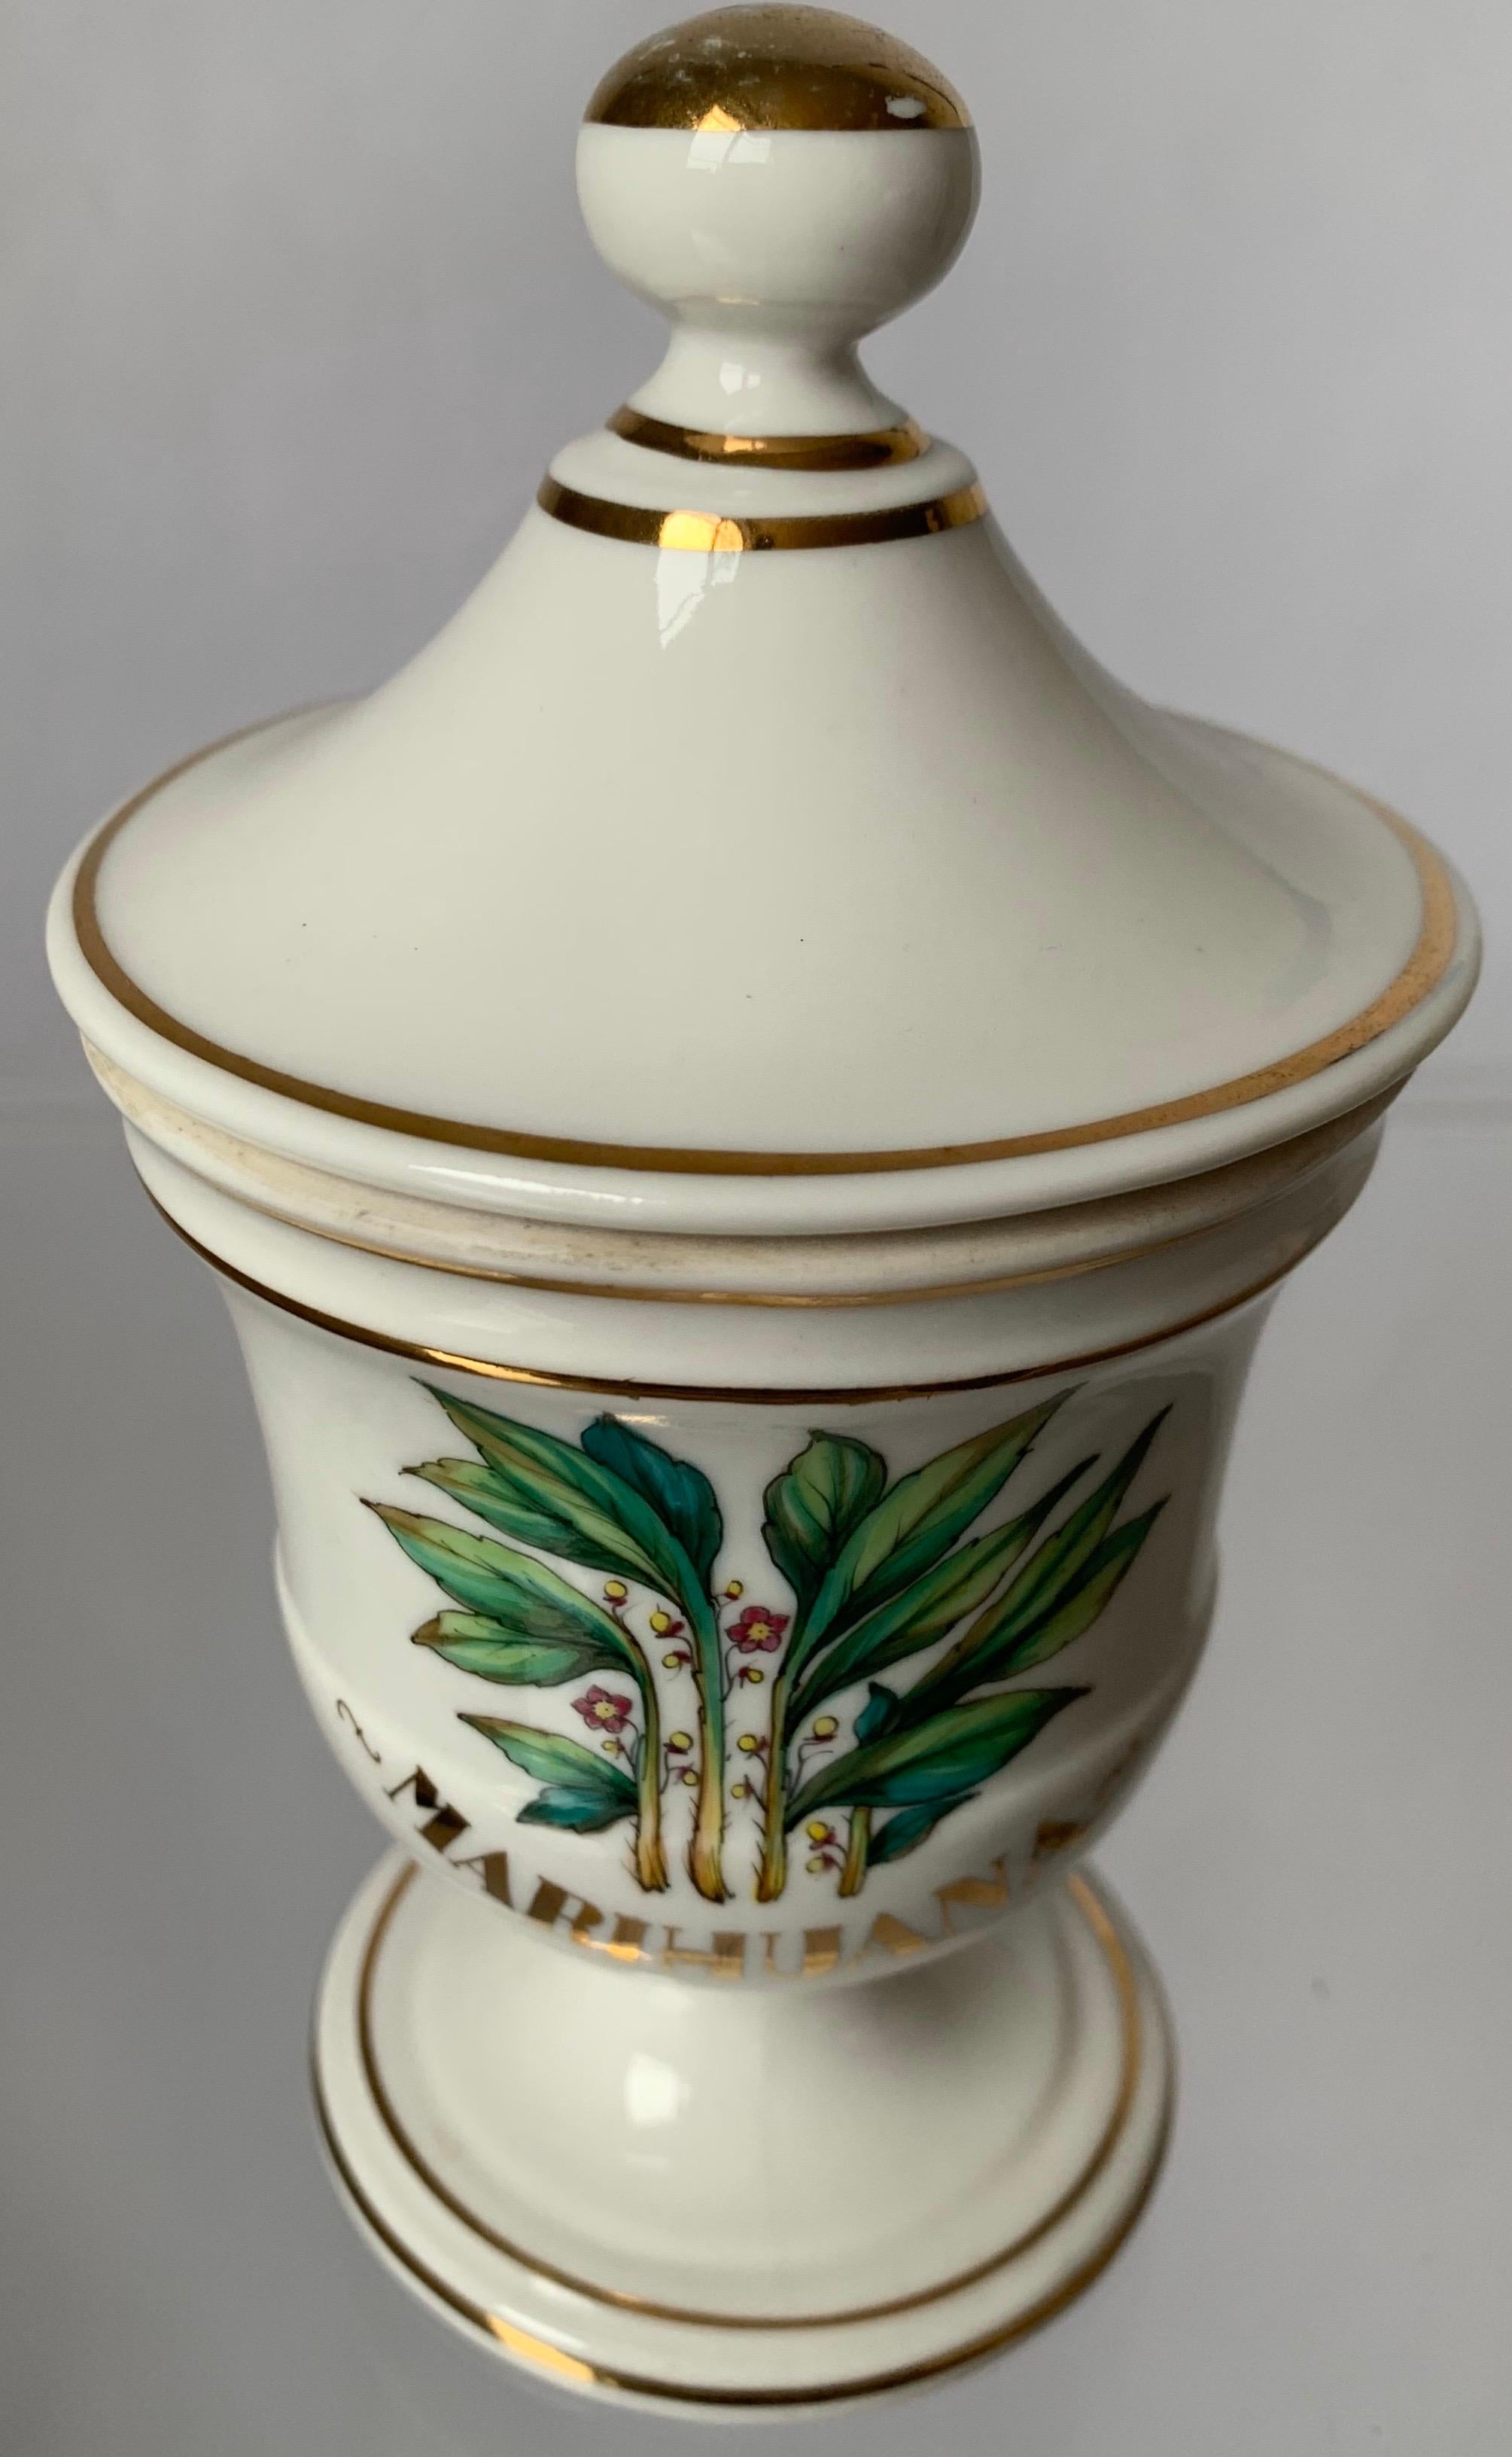 Limoges Marihuana porcelain gold rim apothecary jar. Signed on the underside.